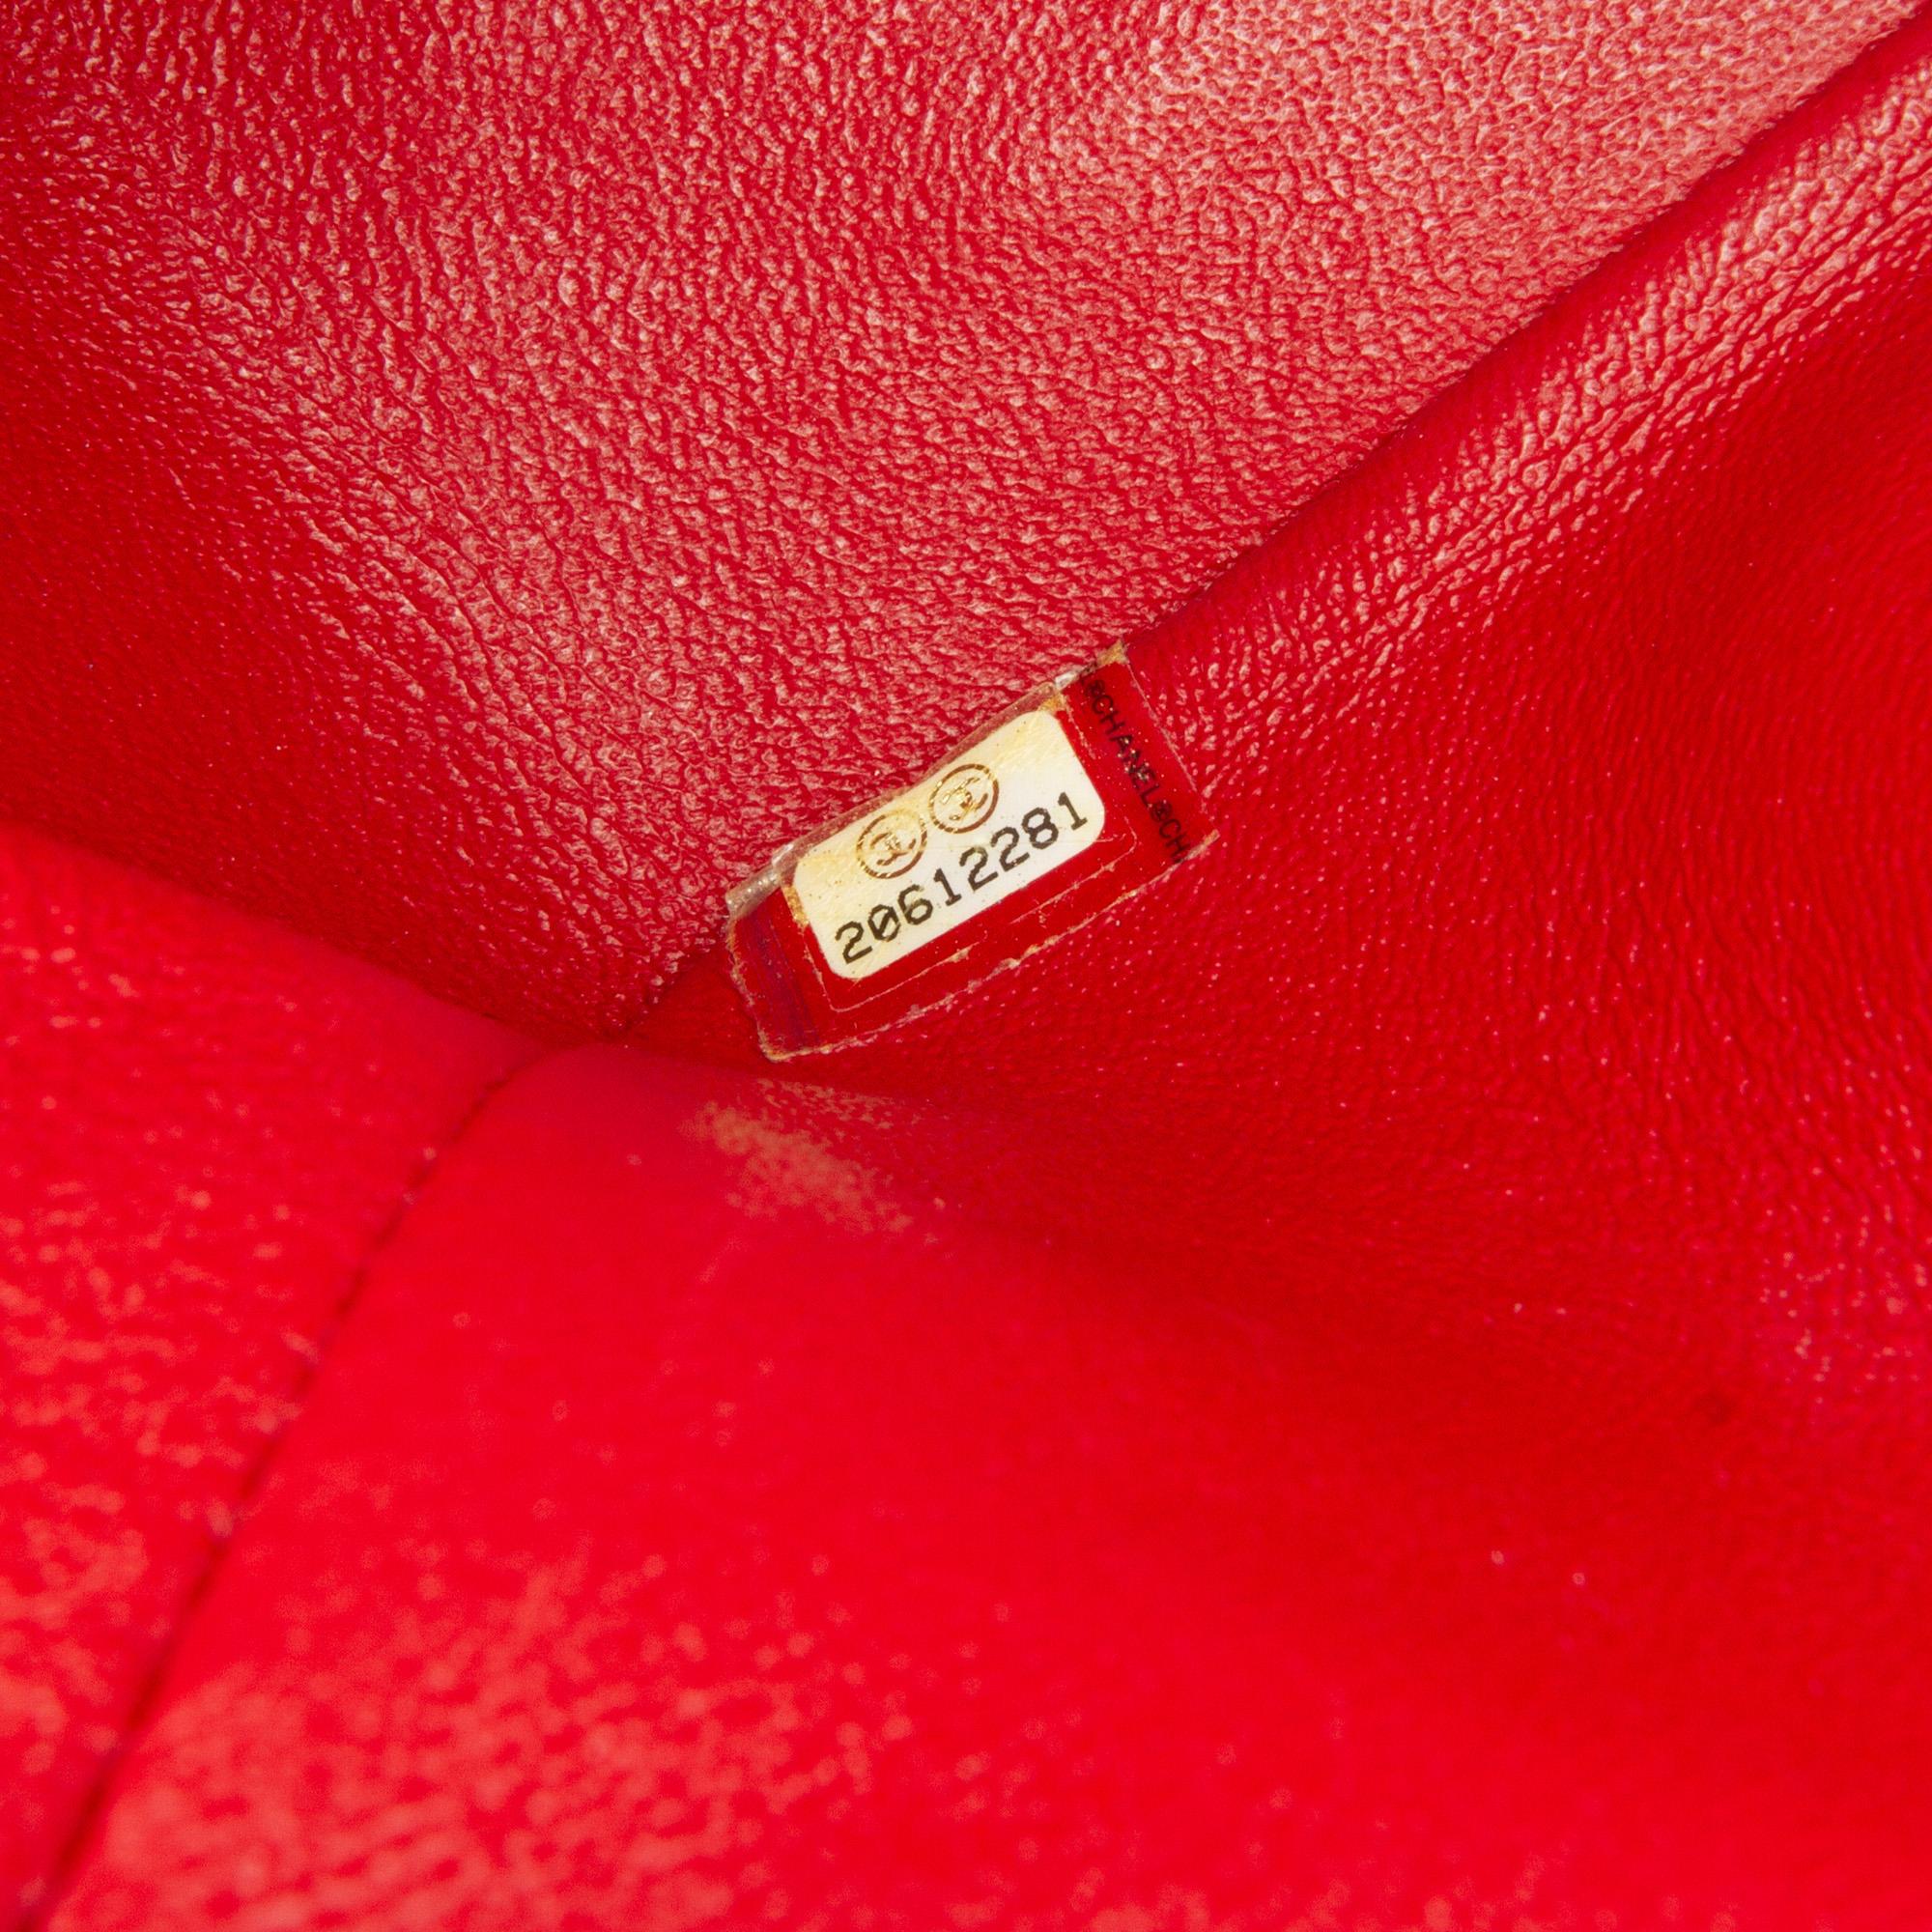 Chanel Red Mini Classic Lambskin Square Single Flap